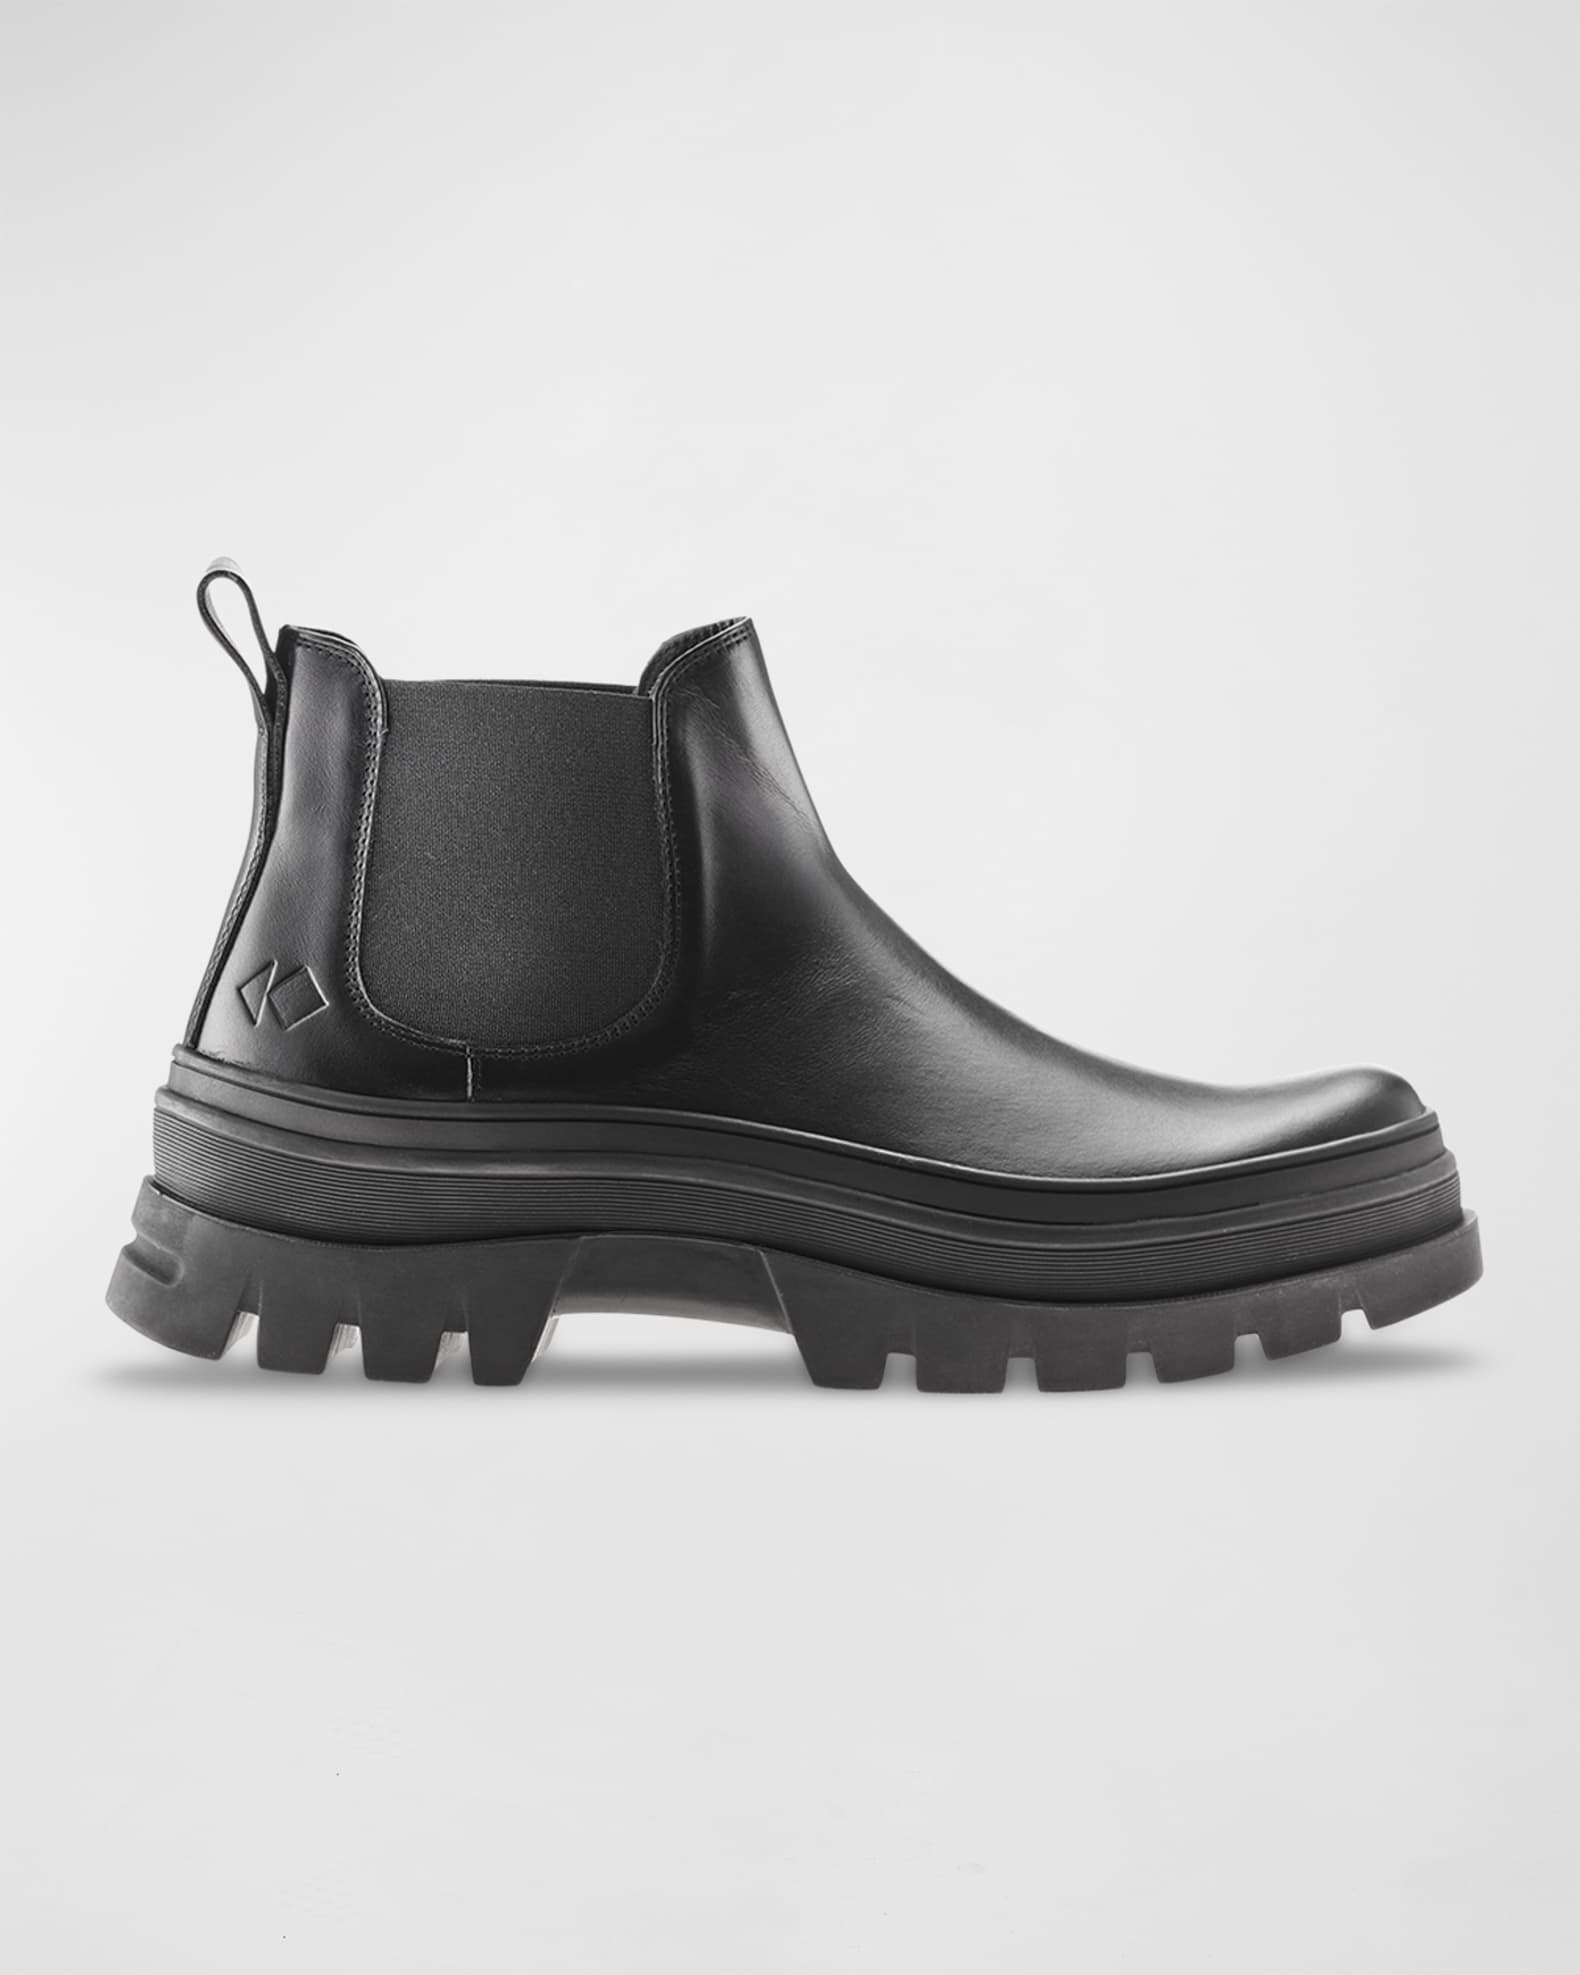 Koio Verona Leather Lug-Sole Chelsea Boots | Neiman Marcus